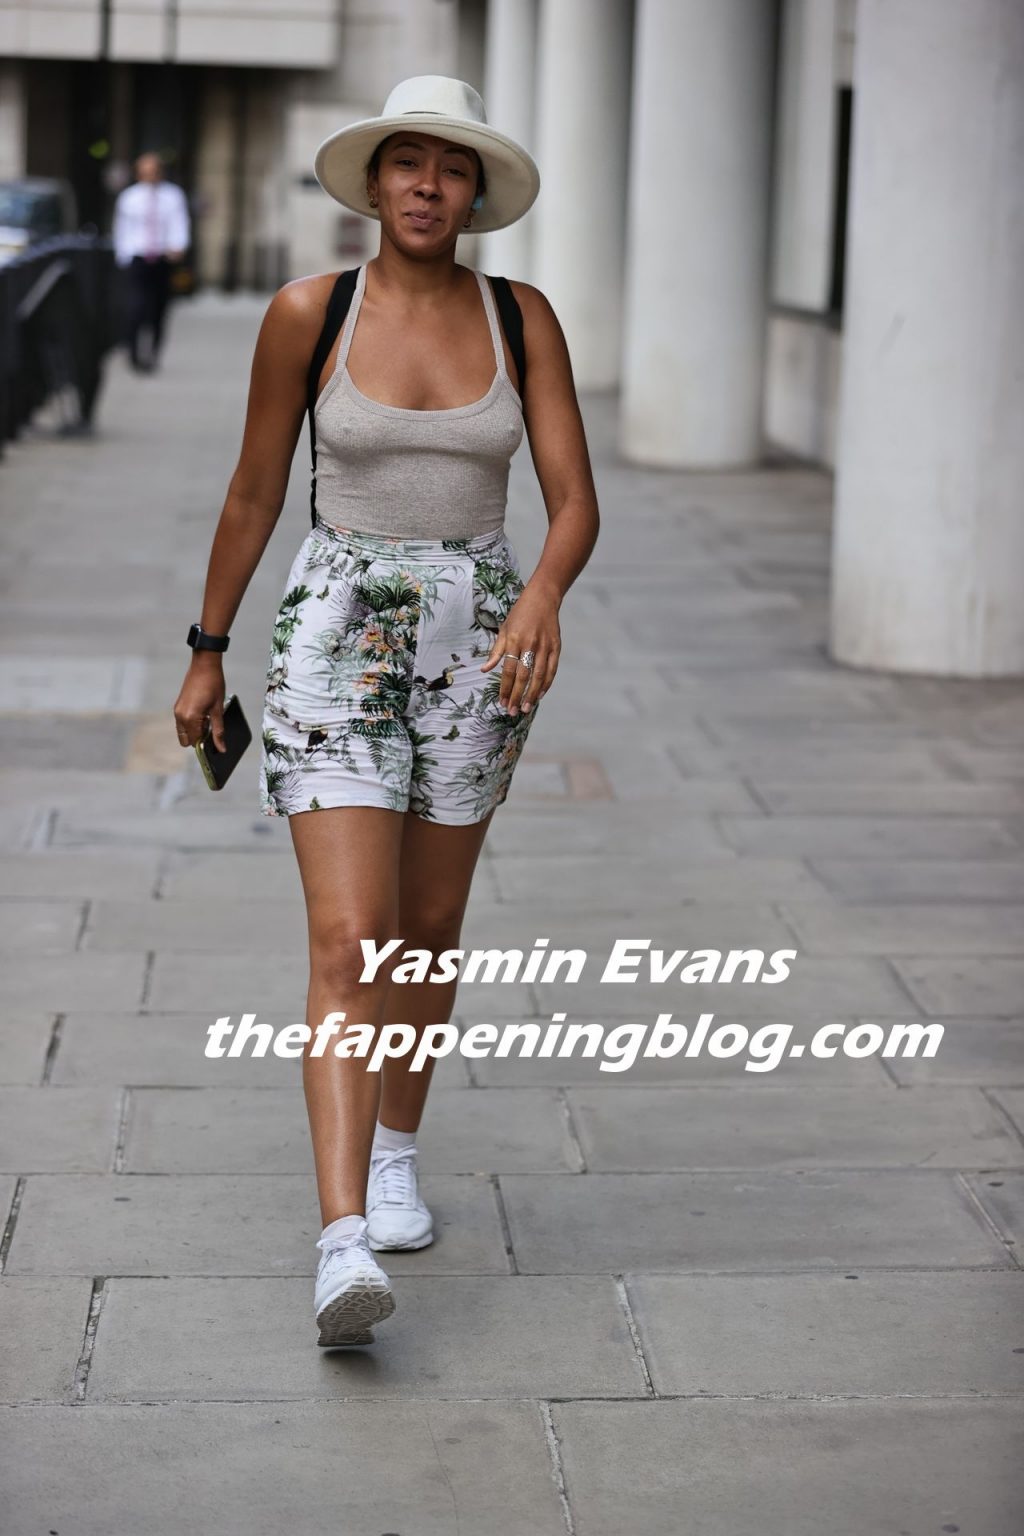 Yasmin Evans Is Seen Braless at BBC Studios (7 Photos)